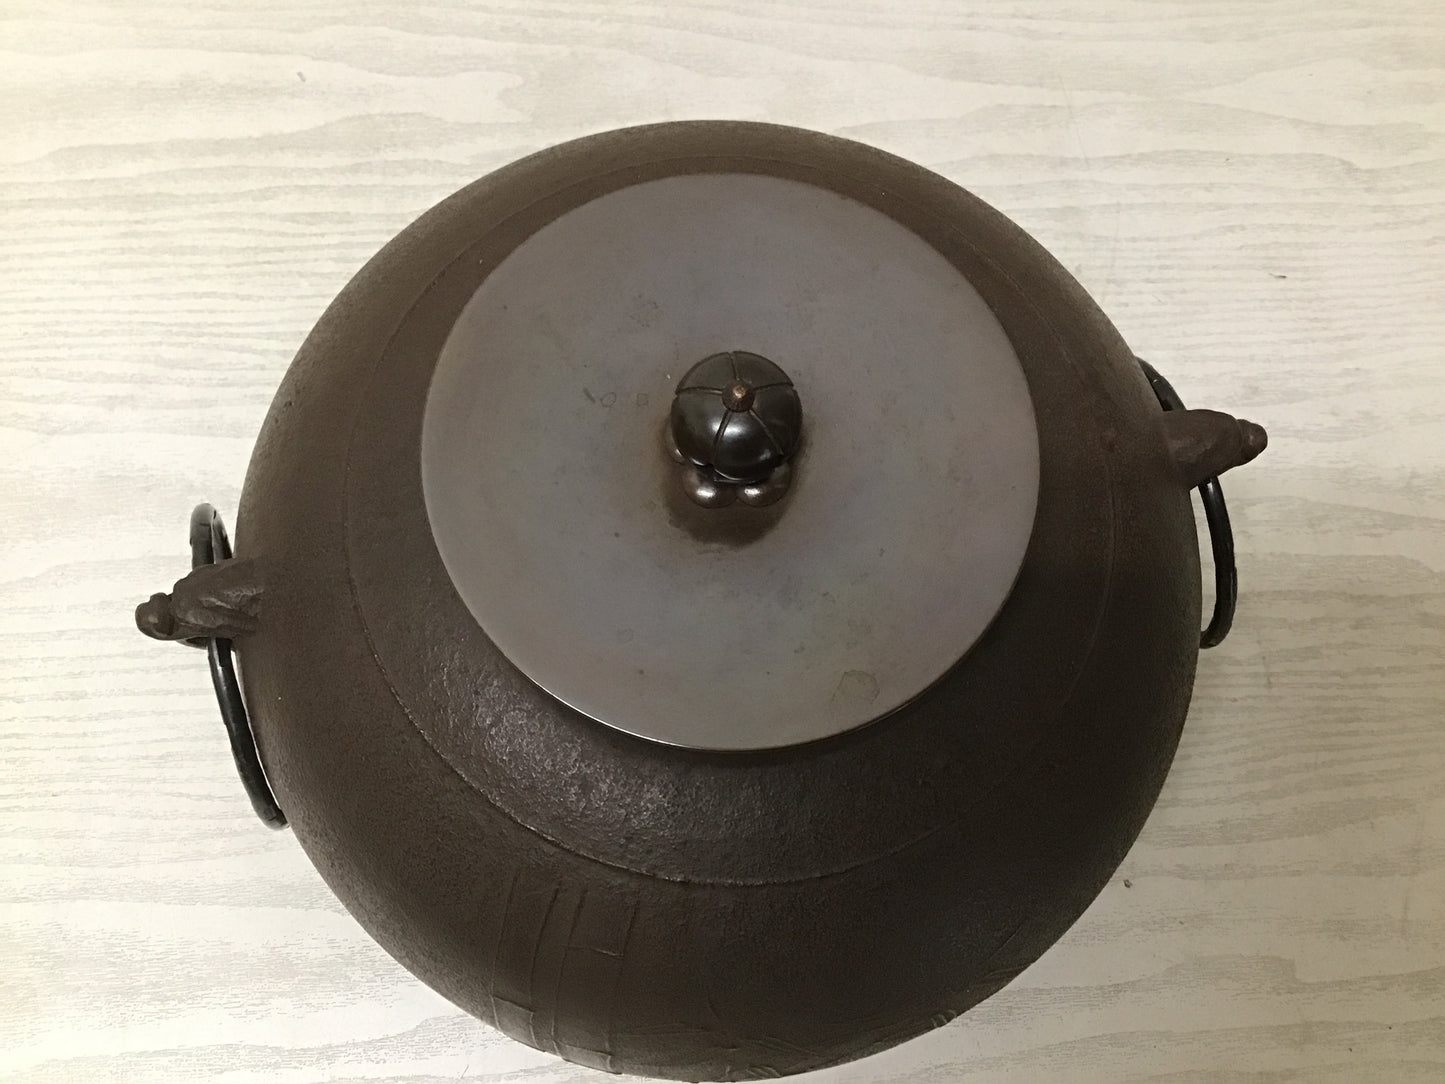 Y2043 CHAGAMA Iron Syason Kakutani signed box Tea Kettle Teapot Japan antique